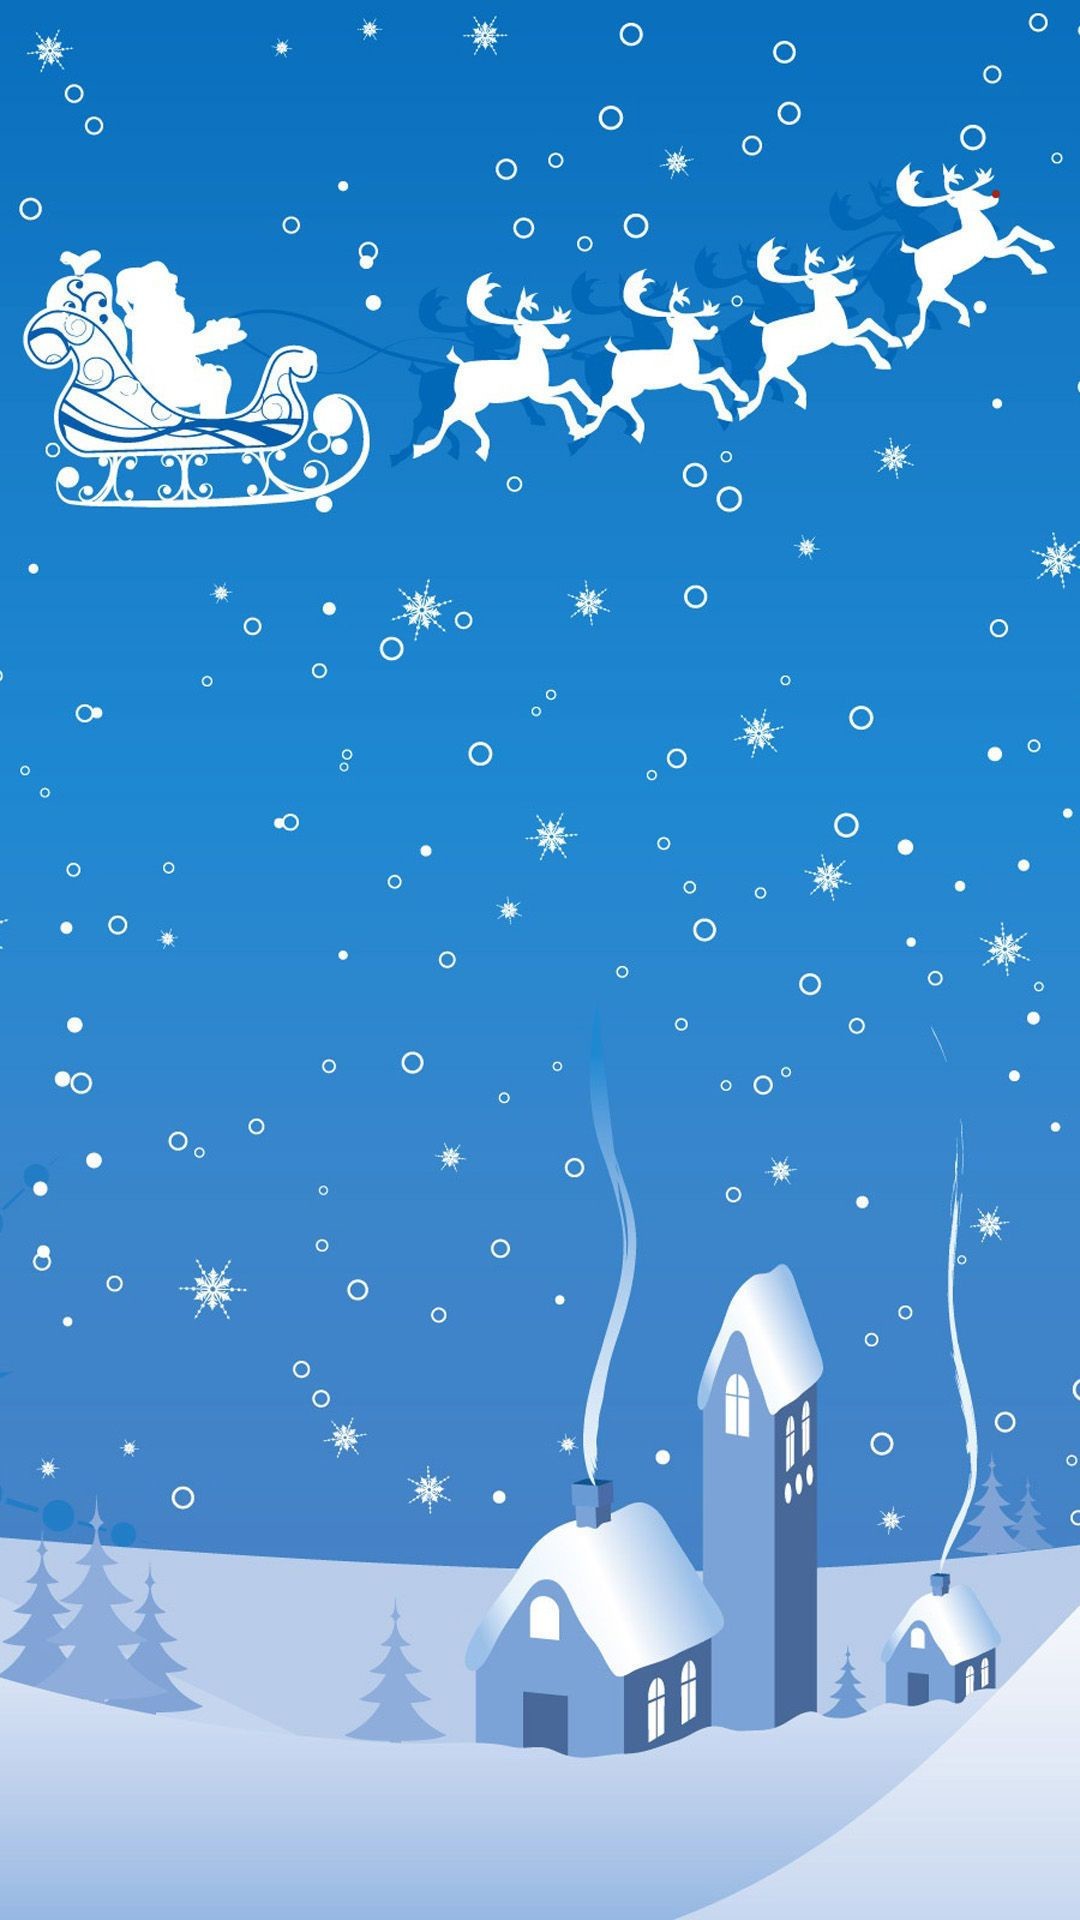 1080x1920 Samsung Galaxy Wallpaper Christmas | Christmas theme blue background HD  samsung galaxy s4 wallpaper